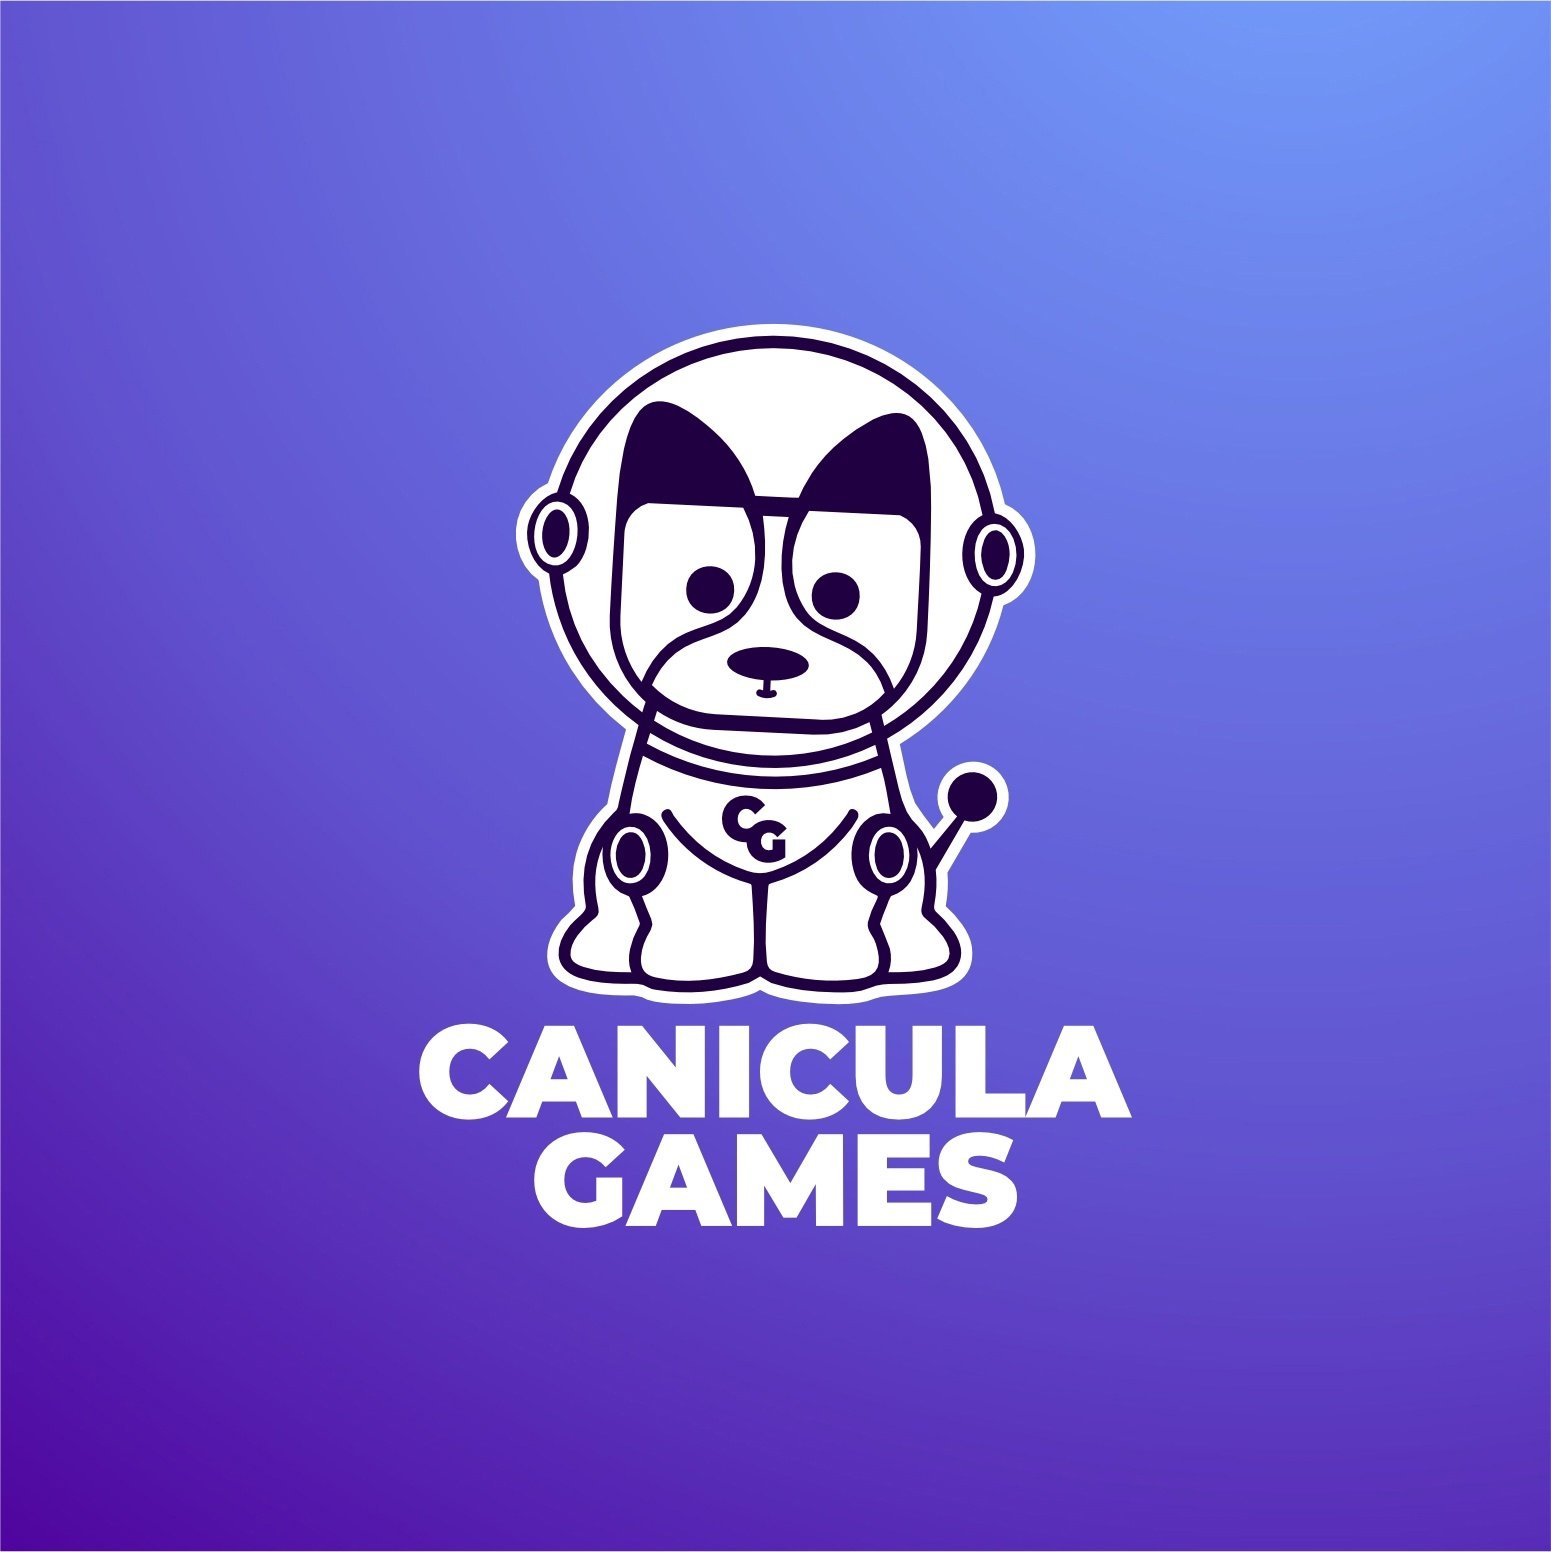 Canicula Games